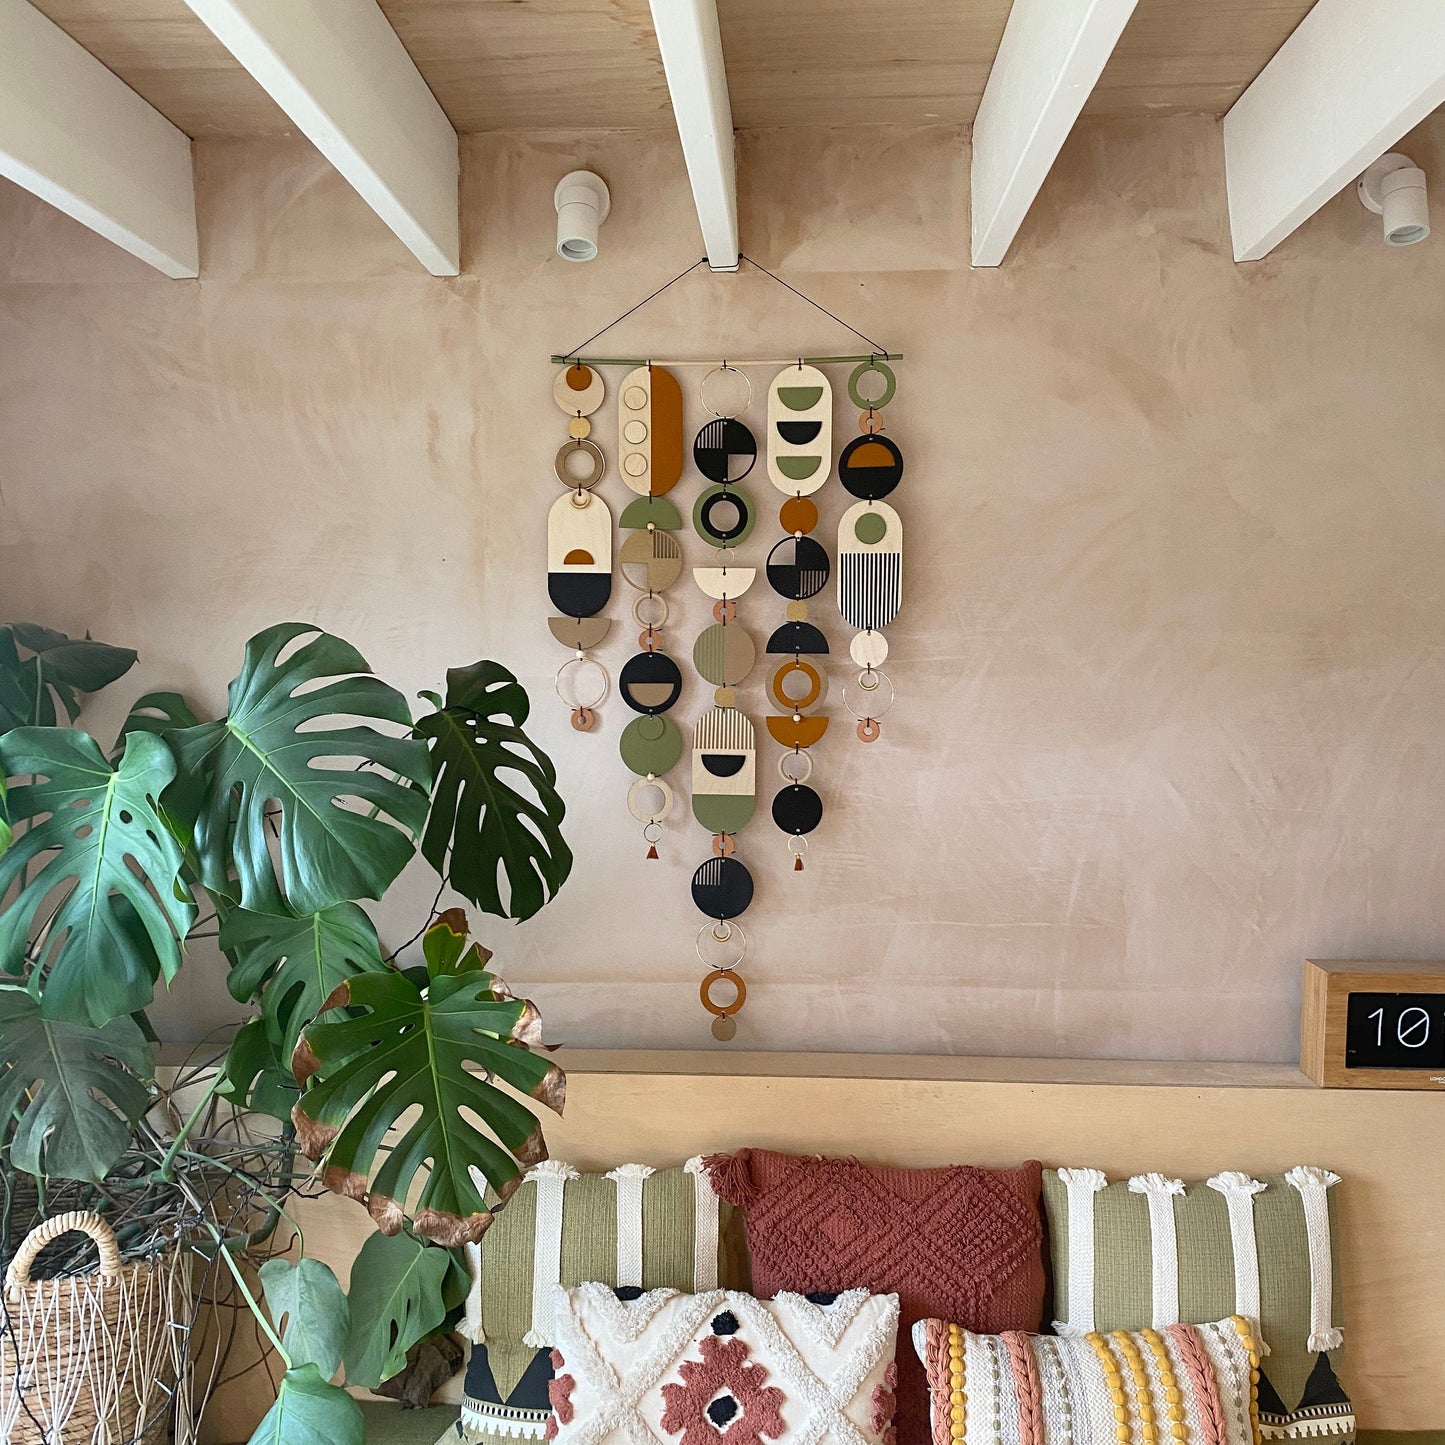 Modern Art Wooden Wall Hanging - Home Decor - ETSY DESIGN AWARDS 2022 winner - Contemporary Wall Art - Wall Tapestry